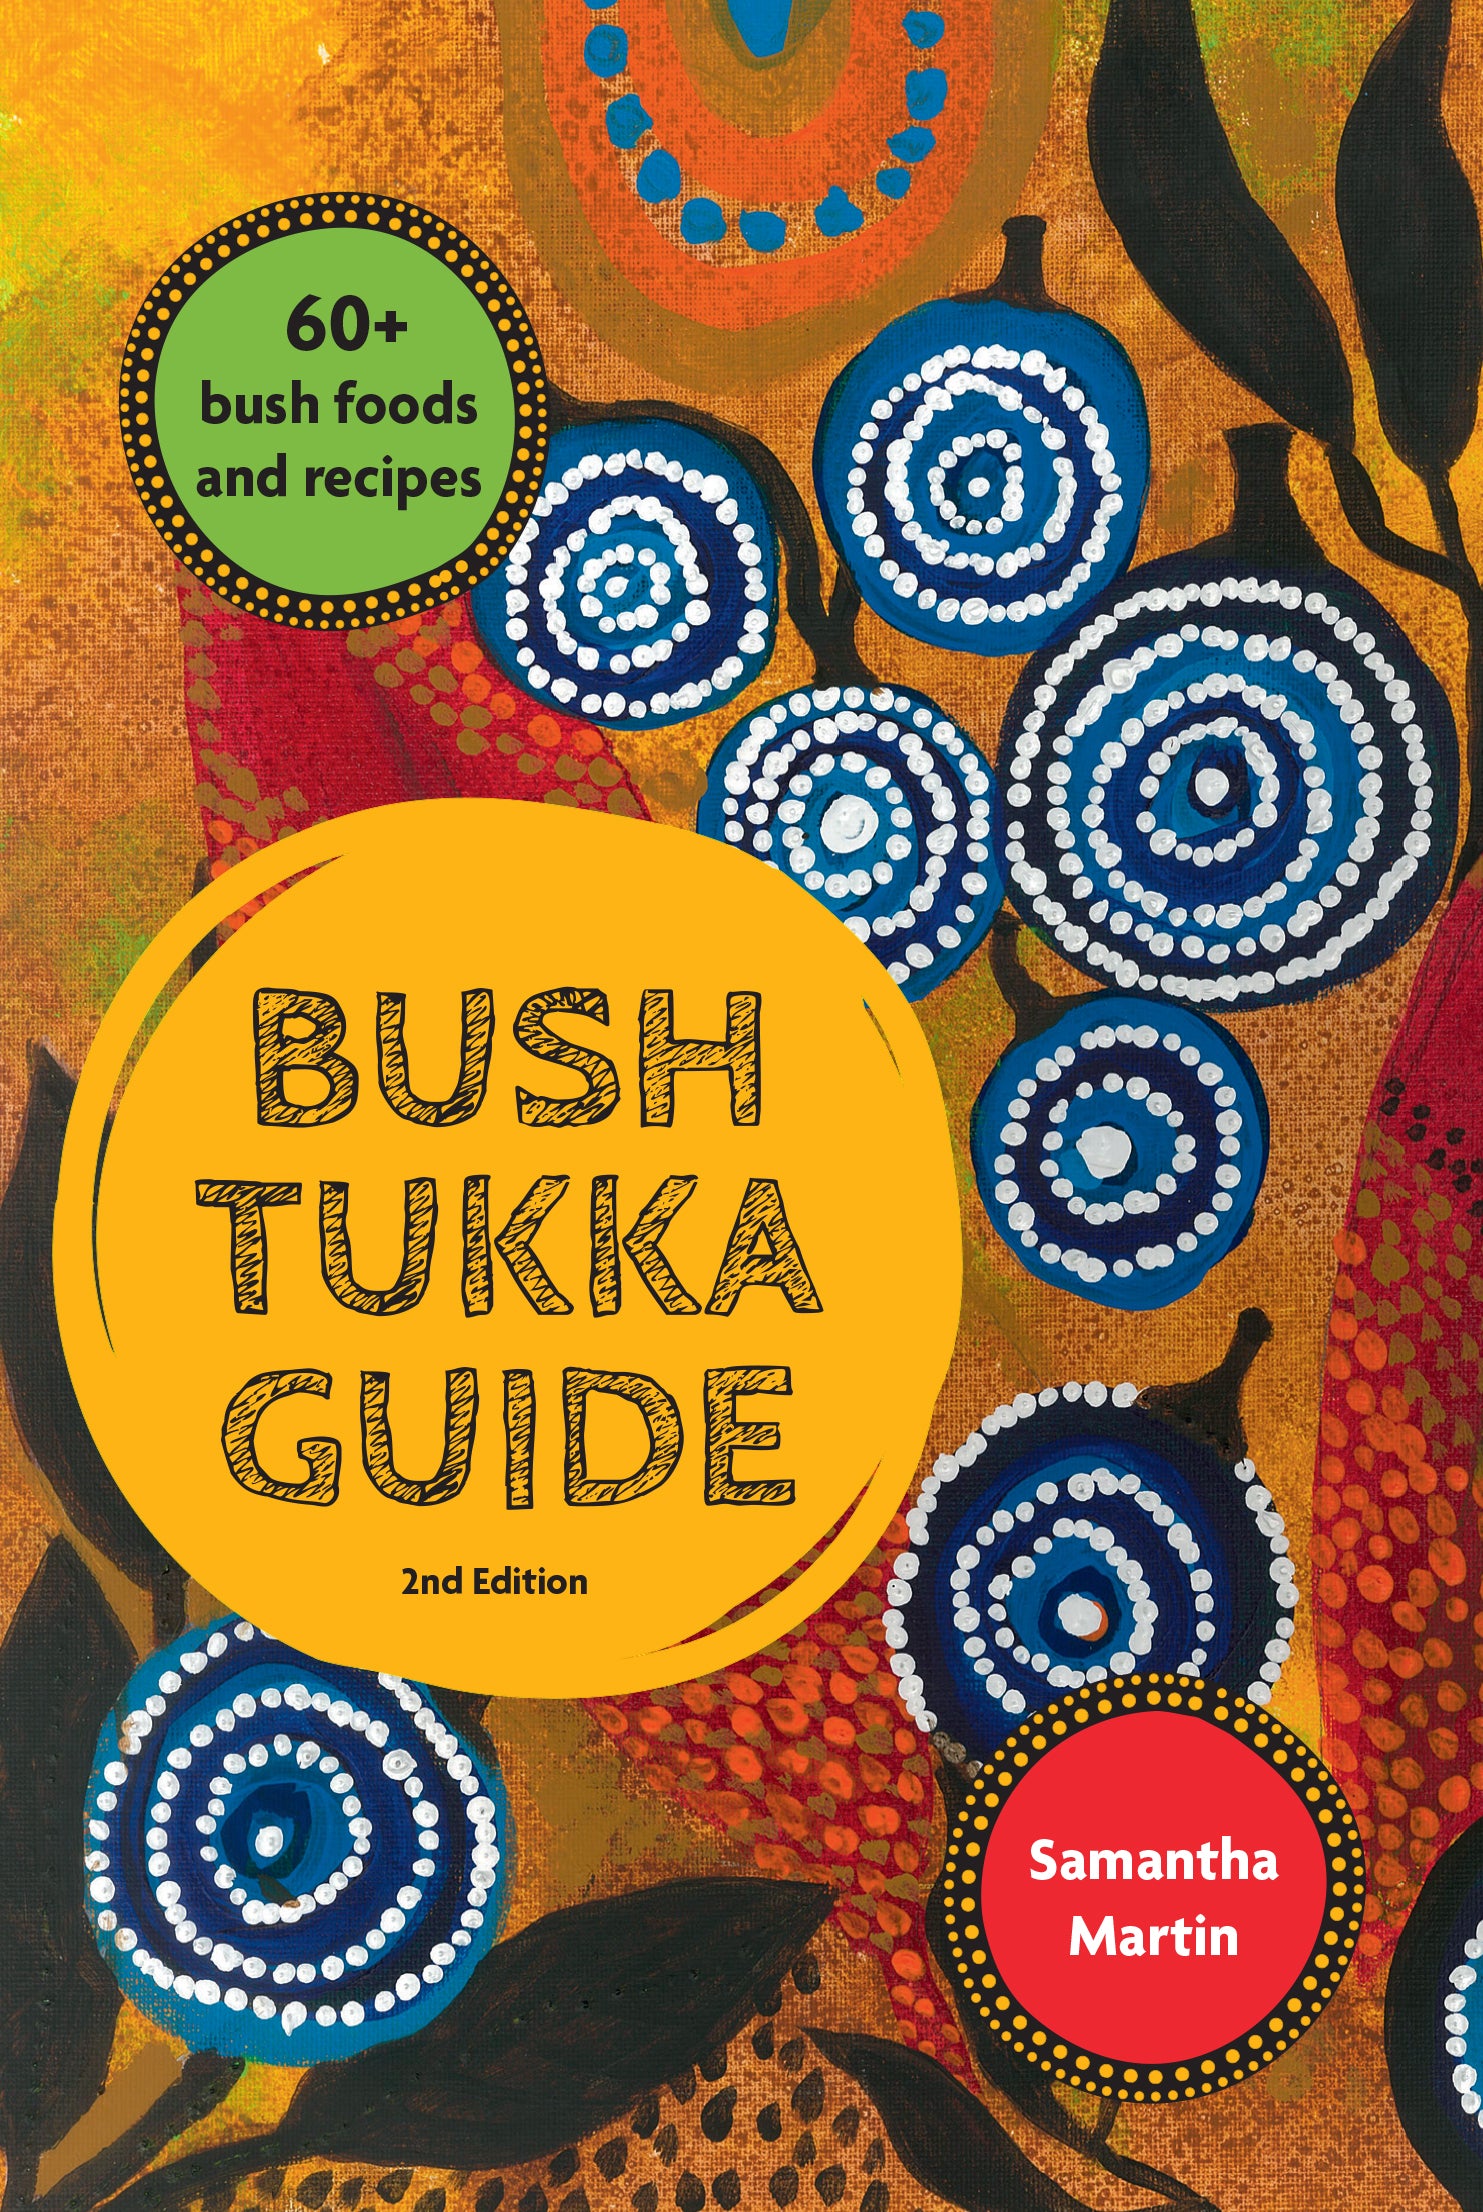 Bush Tukka Guide by Samantha Martin 2nd edition